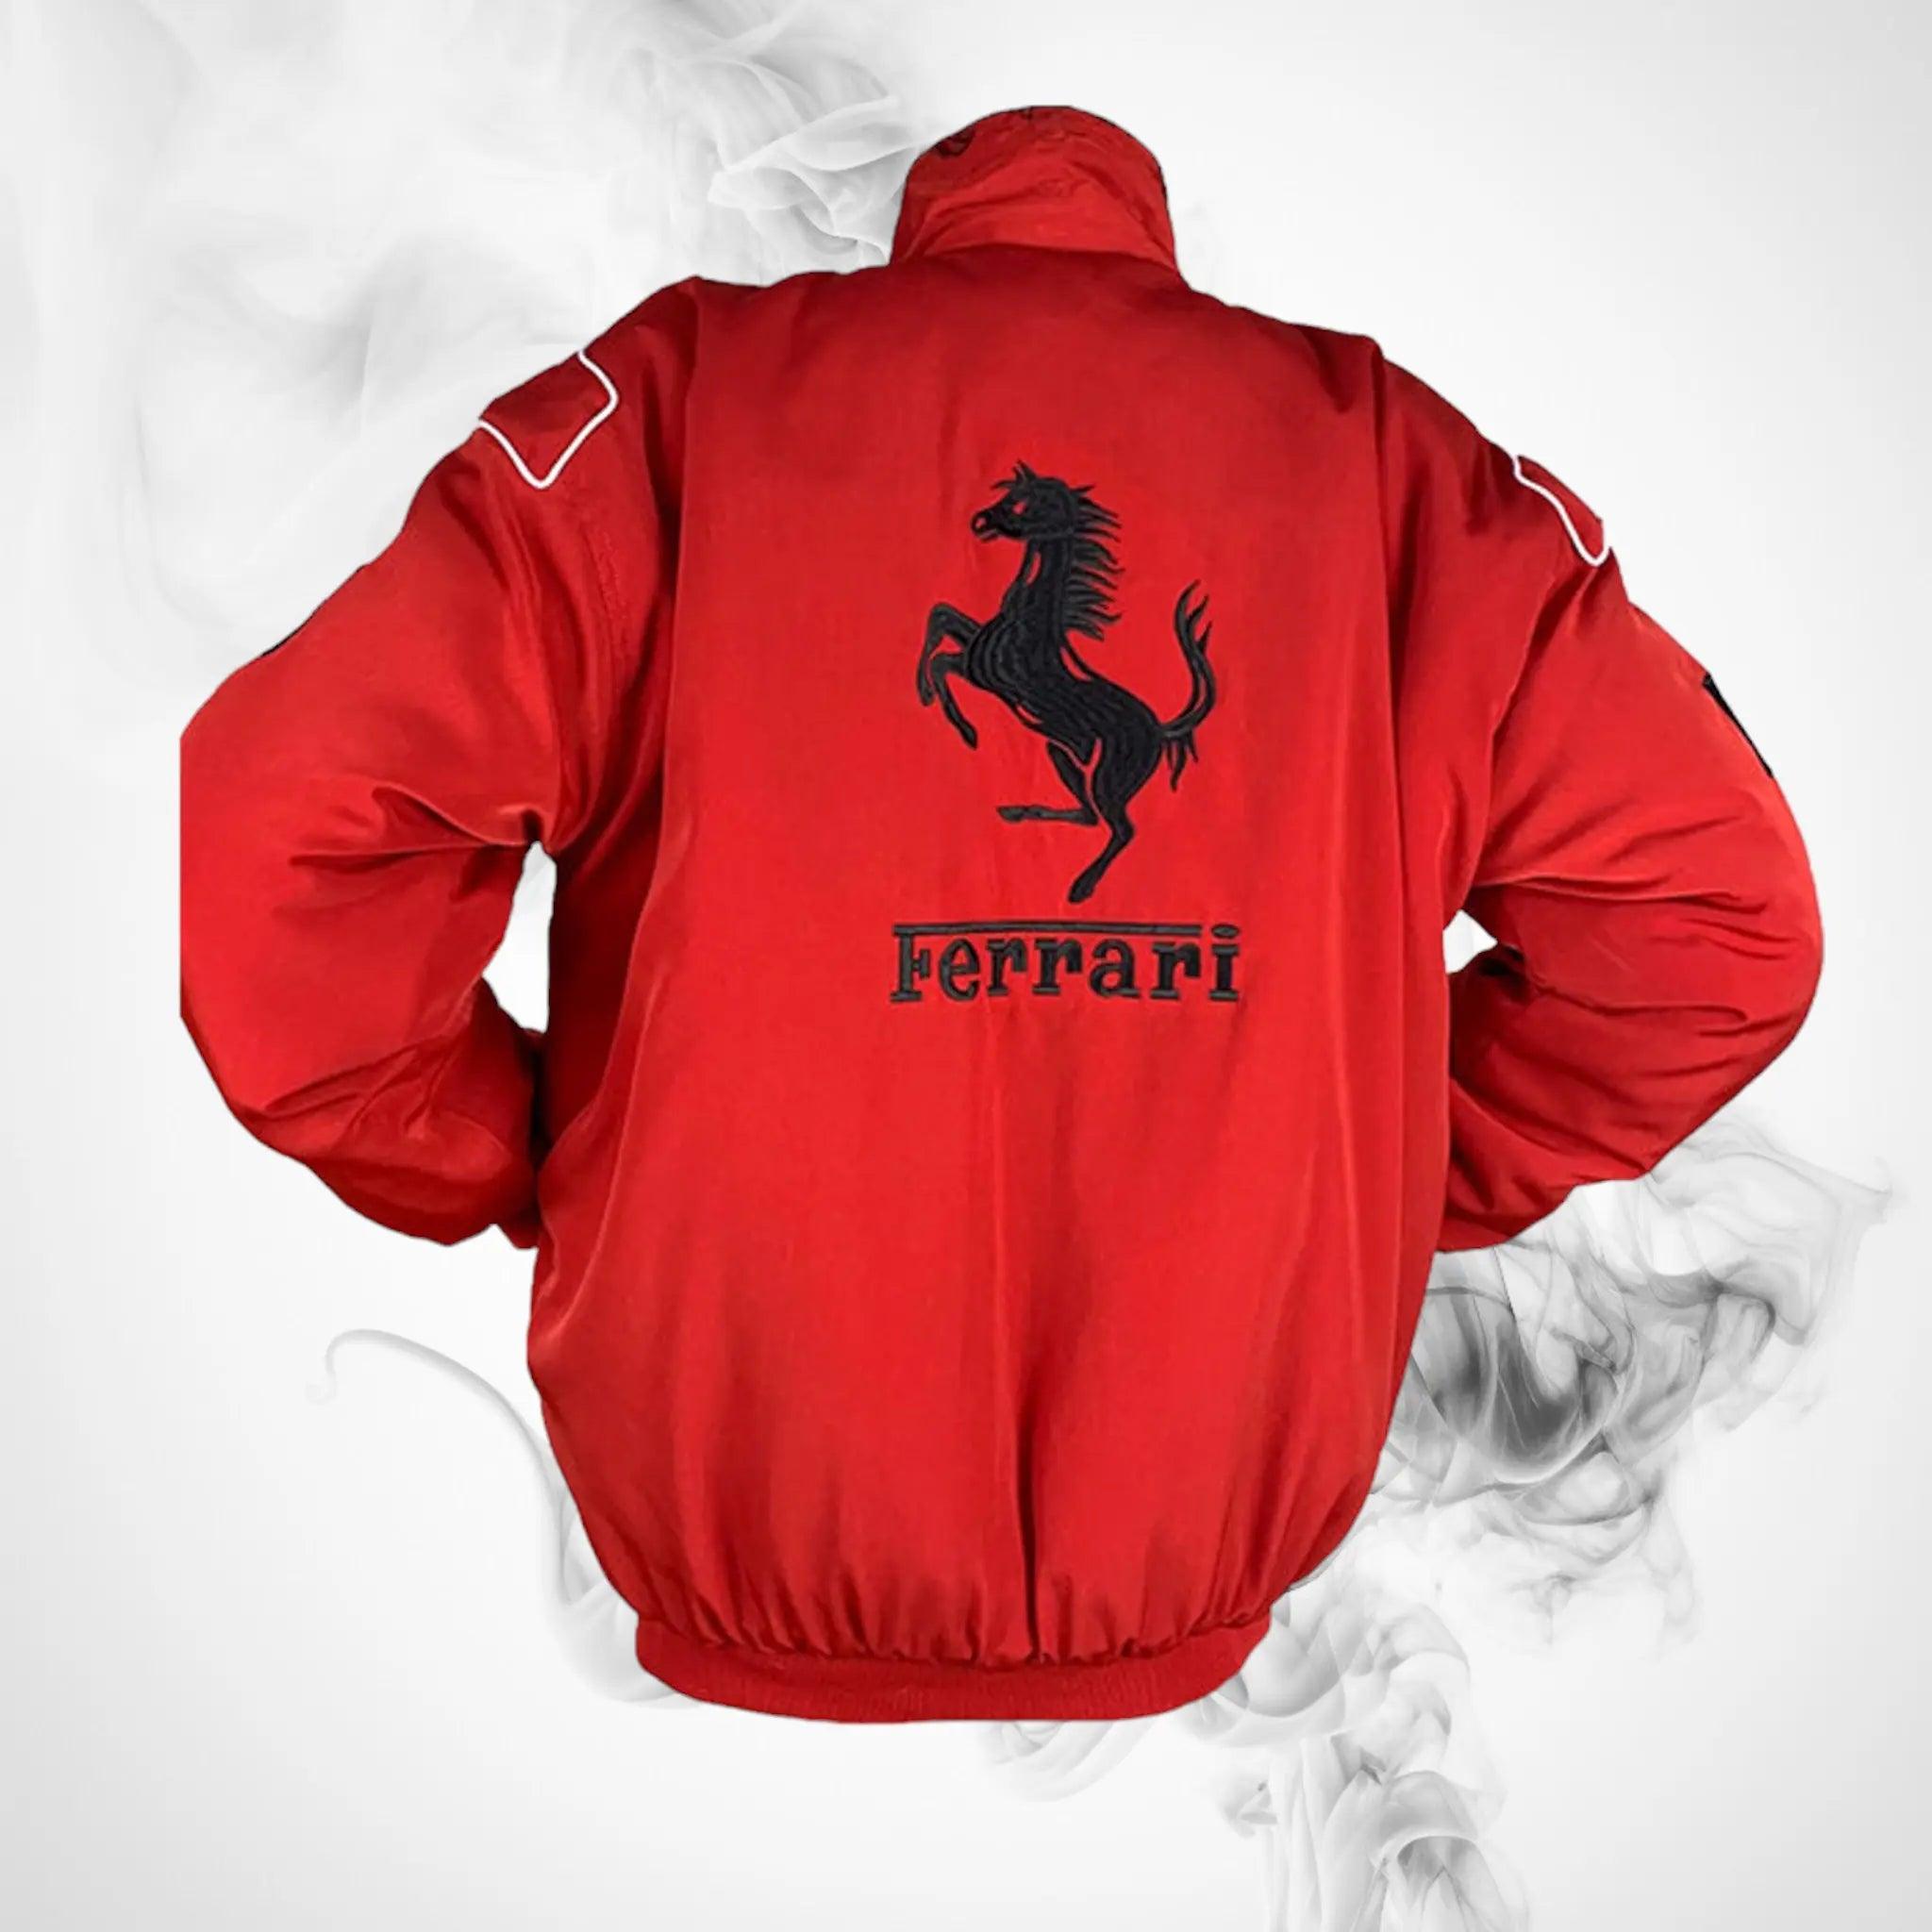 Ferrari Racing Jacket Red and White | NASCAR jacket - Dash Racegear 